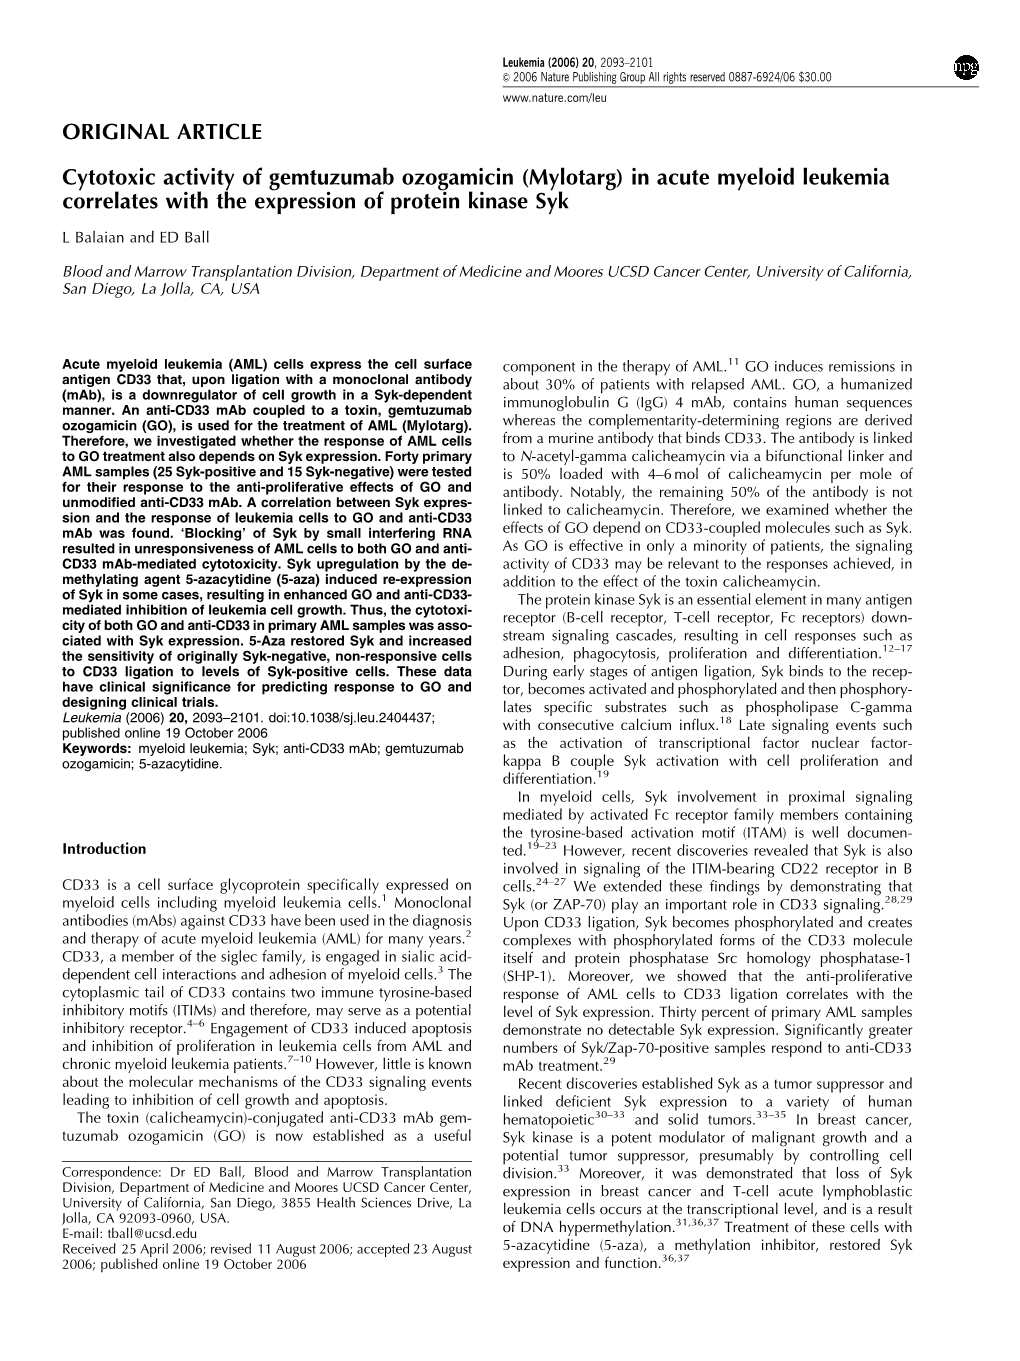 Cytotoxic Activity of Gemtuzumab Ozogamicin (Mylotarg) in Acute Myeloid Leukemia Correlates with the Expression of Protein Kinase Syk